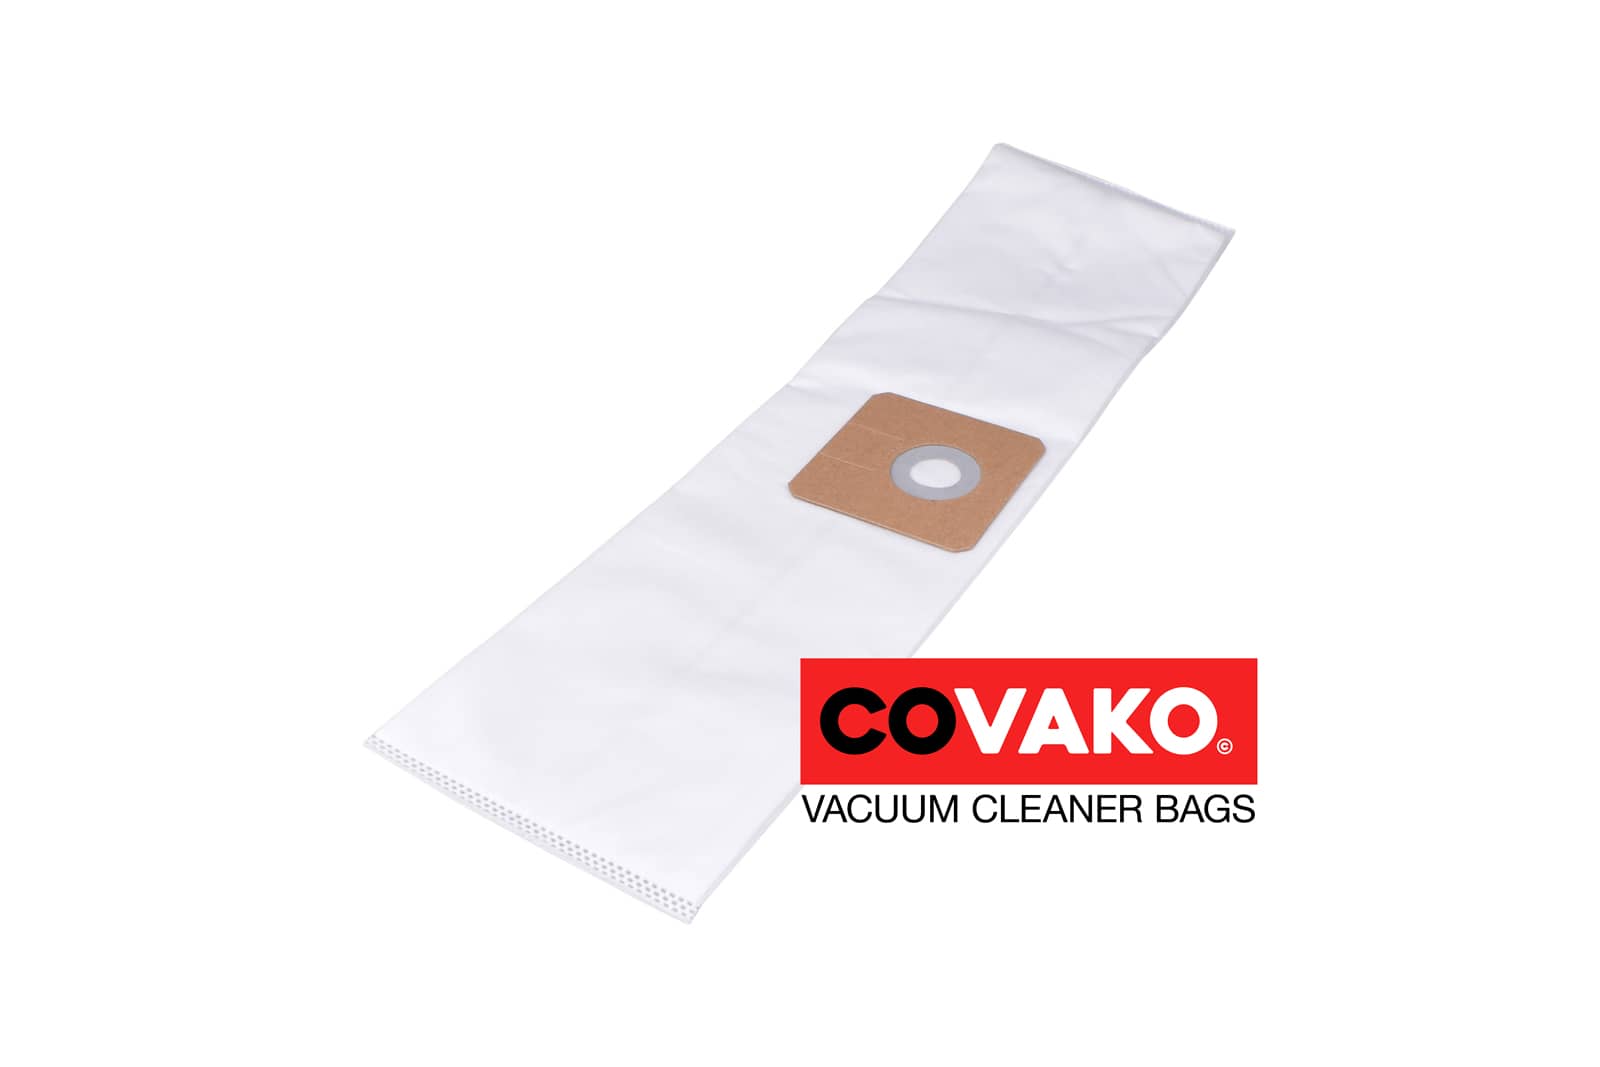 DiBo Leo Maxi,Glob / Synthesis - DiBo vacuum cleaner bags